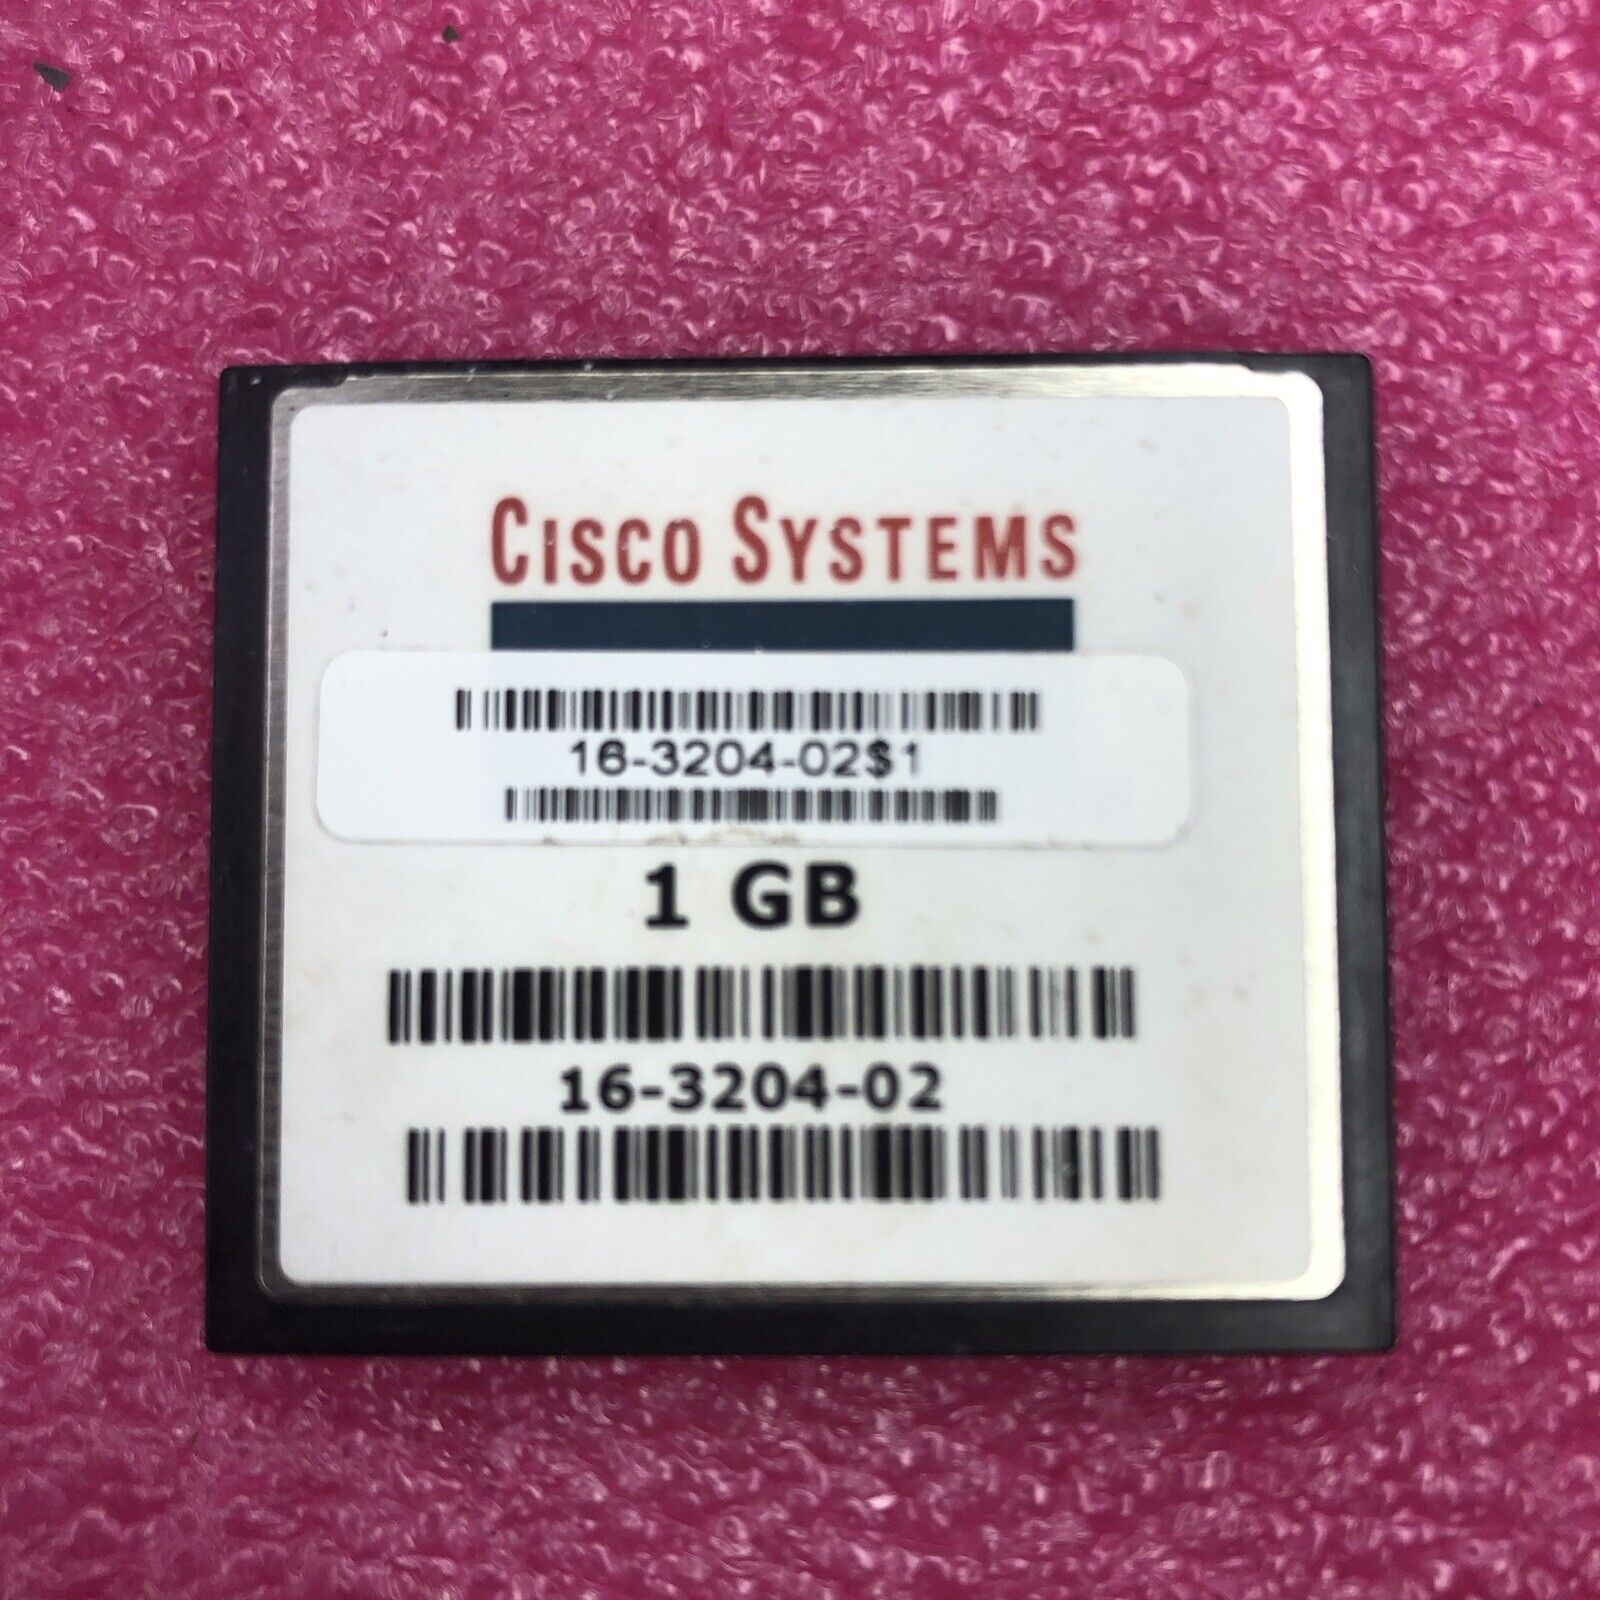 CISCO 16-3204-02$1 MDS 9500 EMC2 DS-C9513 Compact Flash Card Module